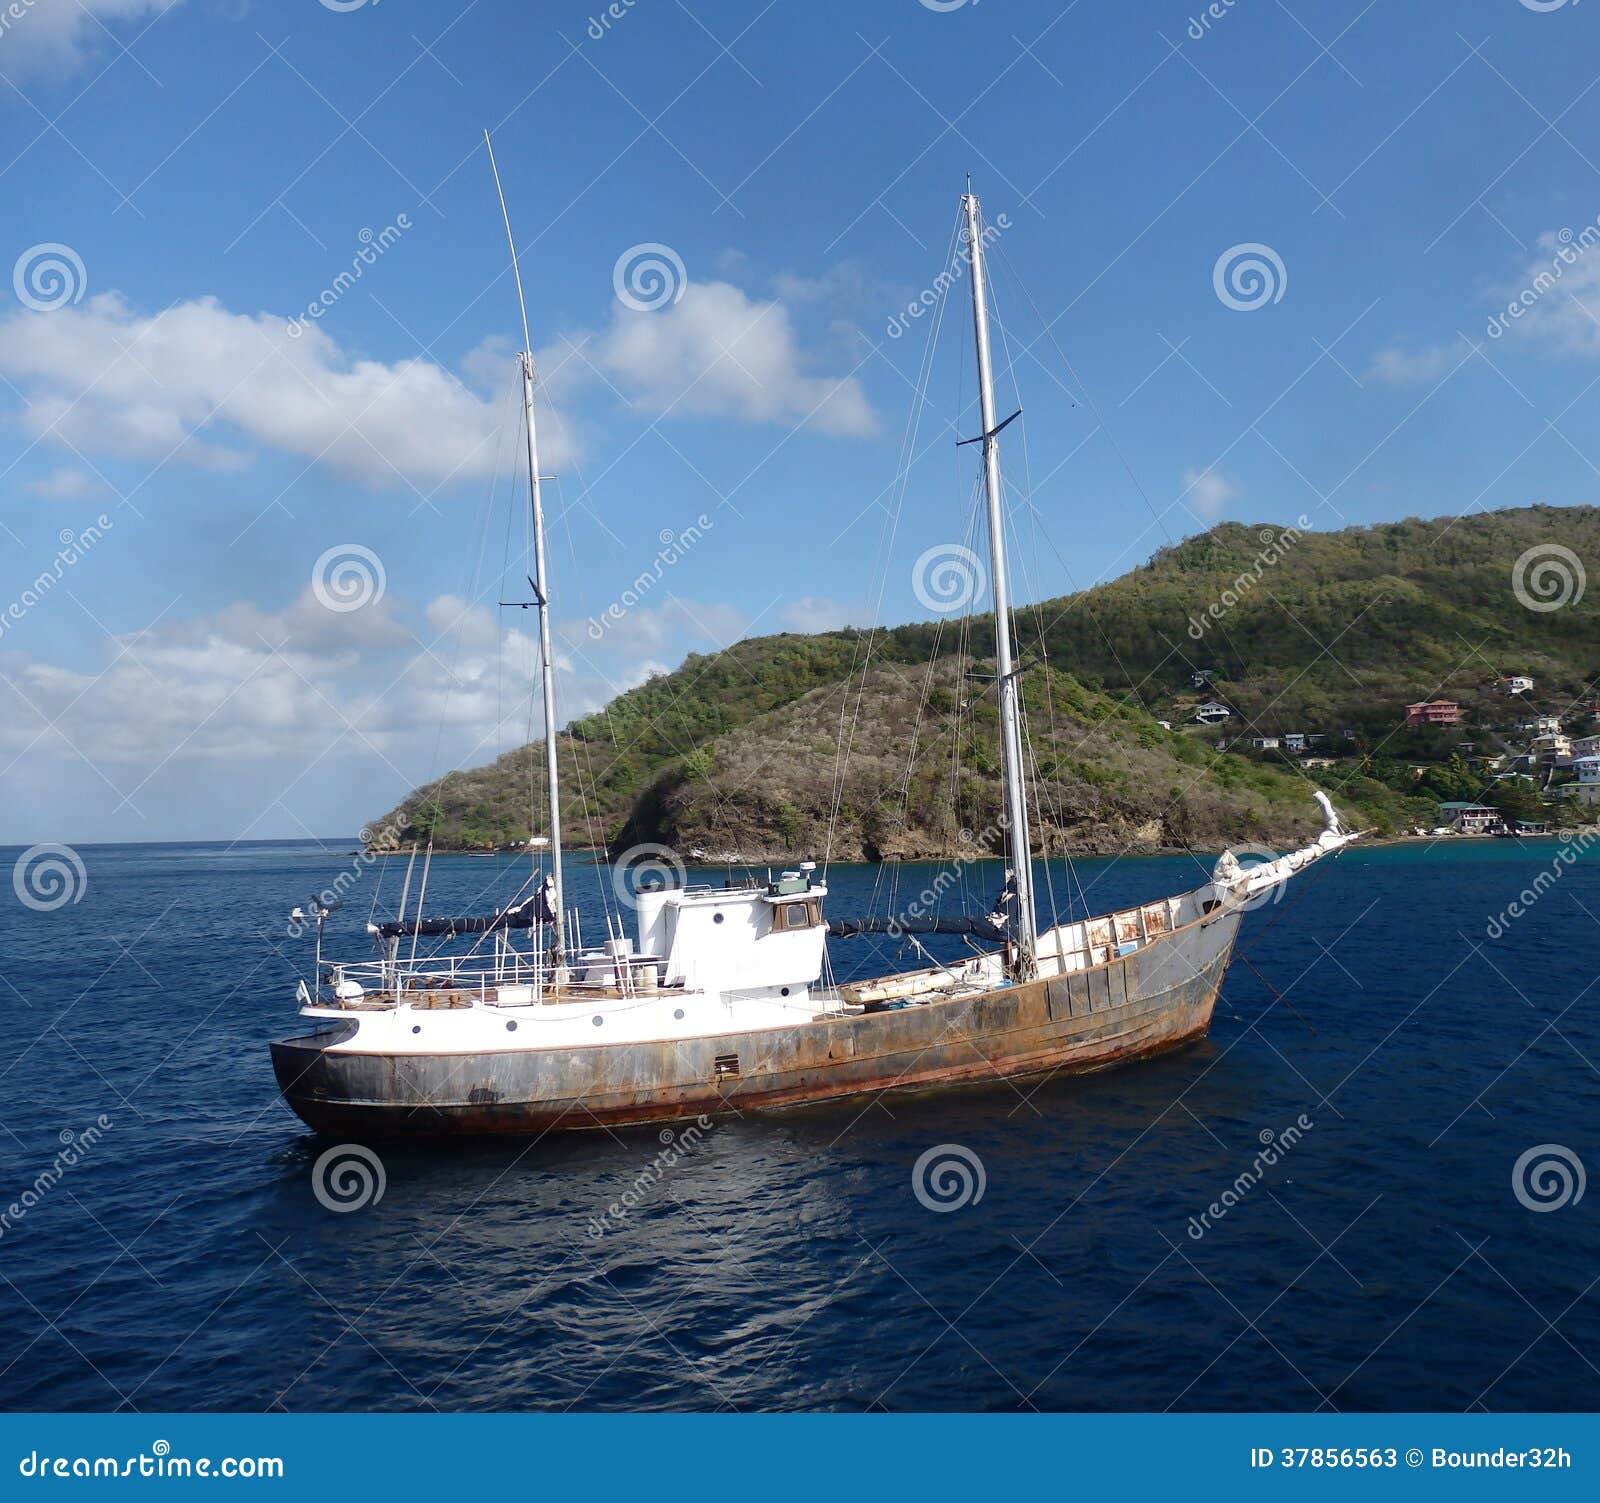 A Fishing Trawler Conversion. Stock Photos - Image: 37856563